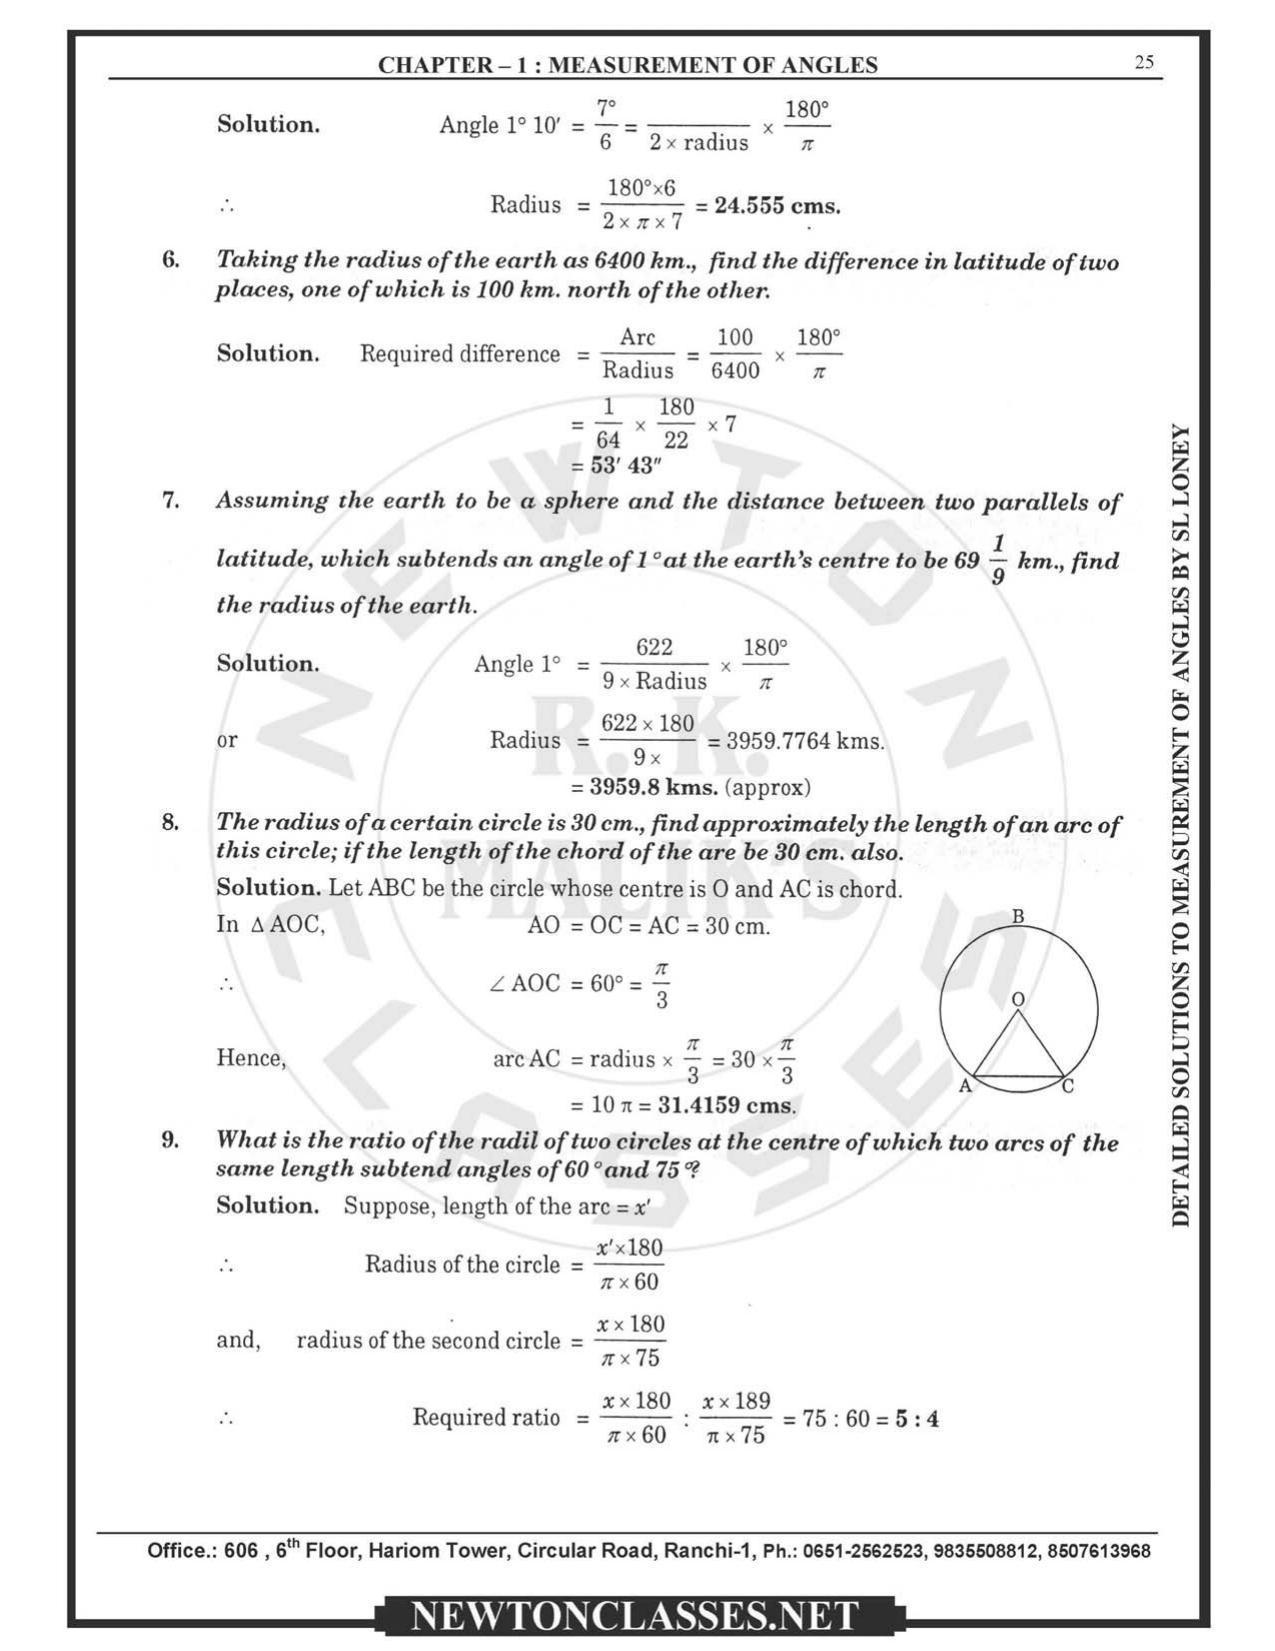 SL Loney Plane Trigonometry Solutions: Measurement of Angles - Page 25